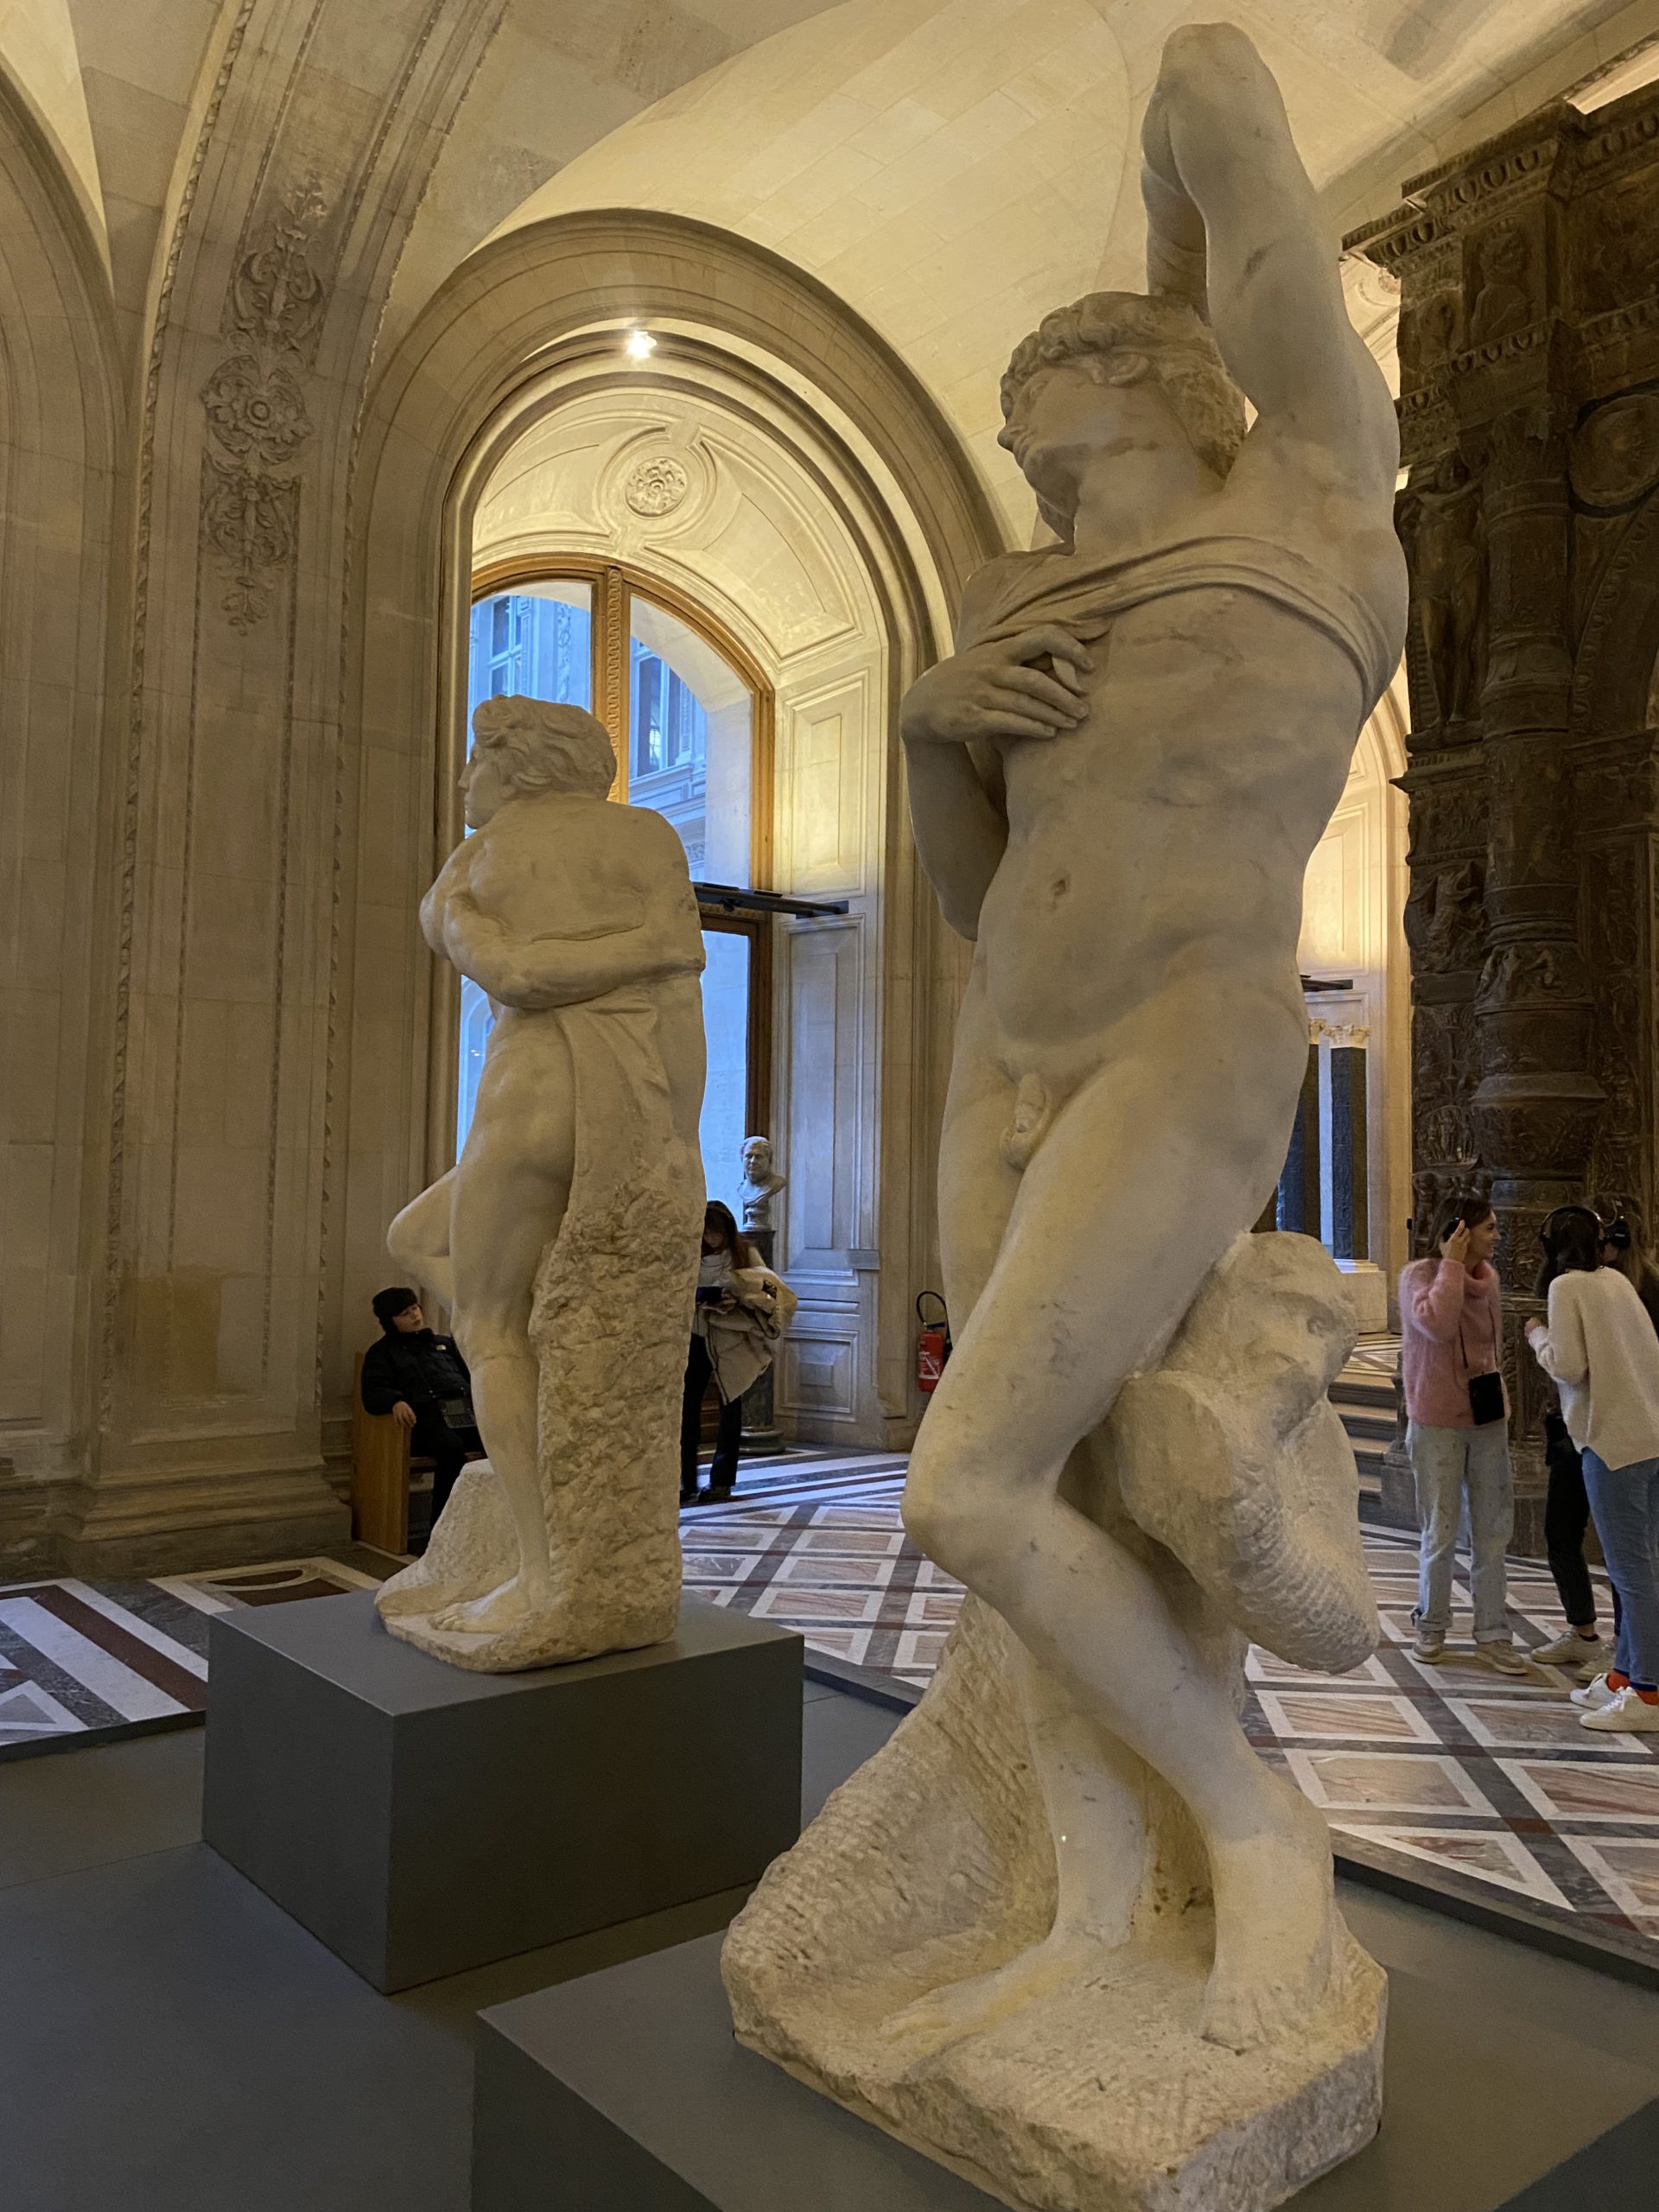 Michelangelo's Slaves